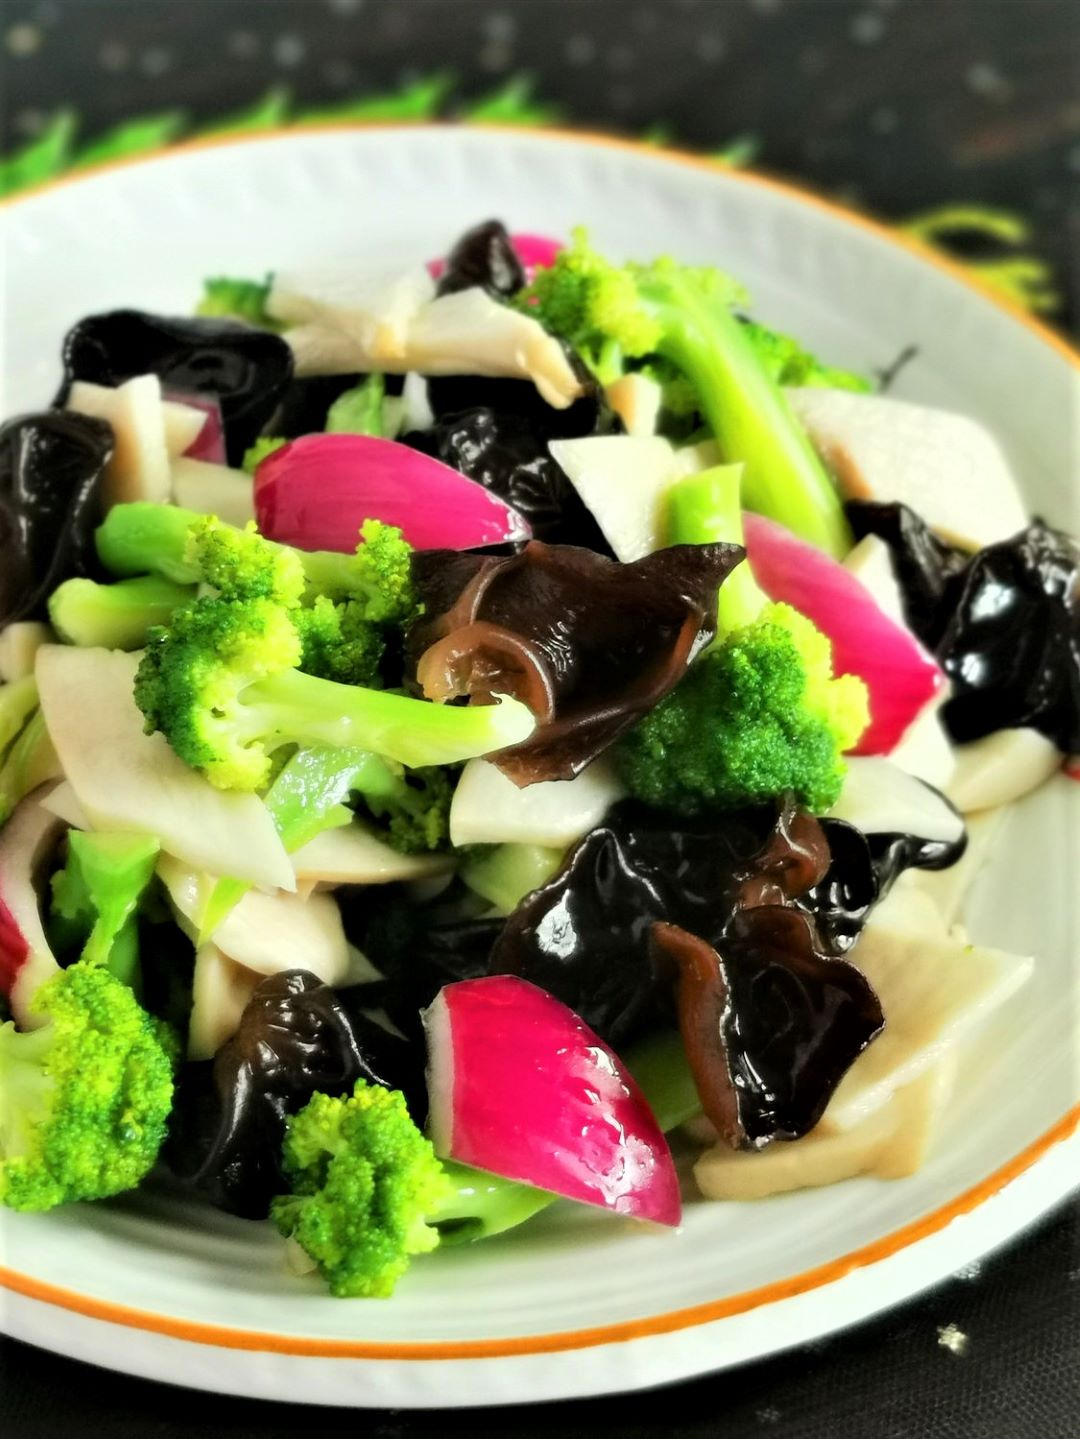 Mixed healthy vegetable salad recipe 2020